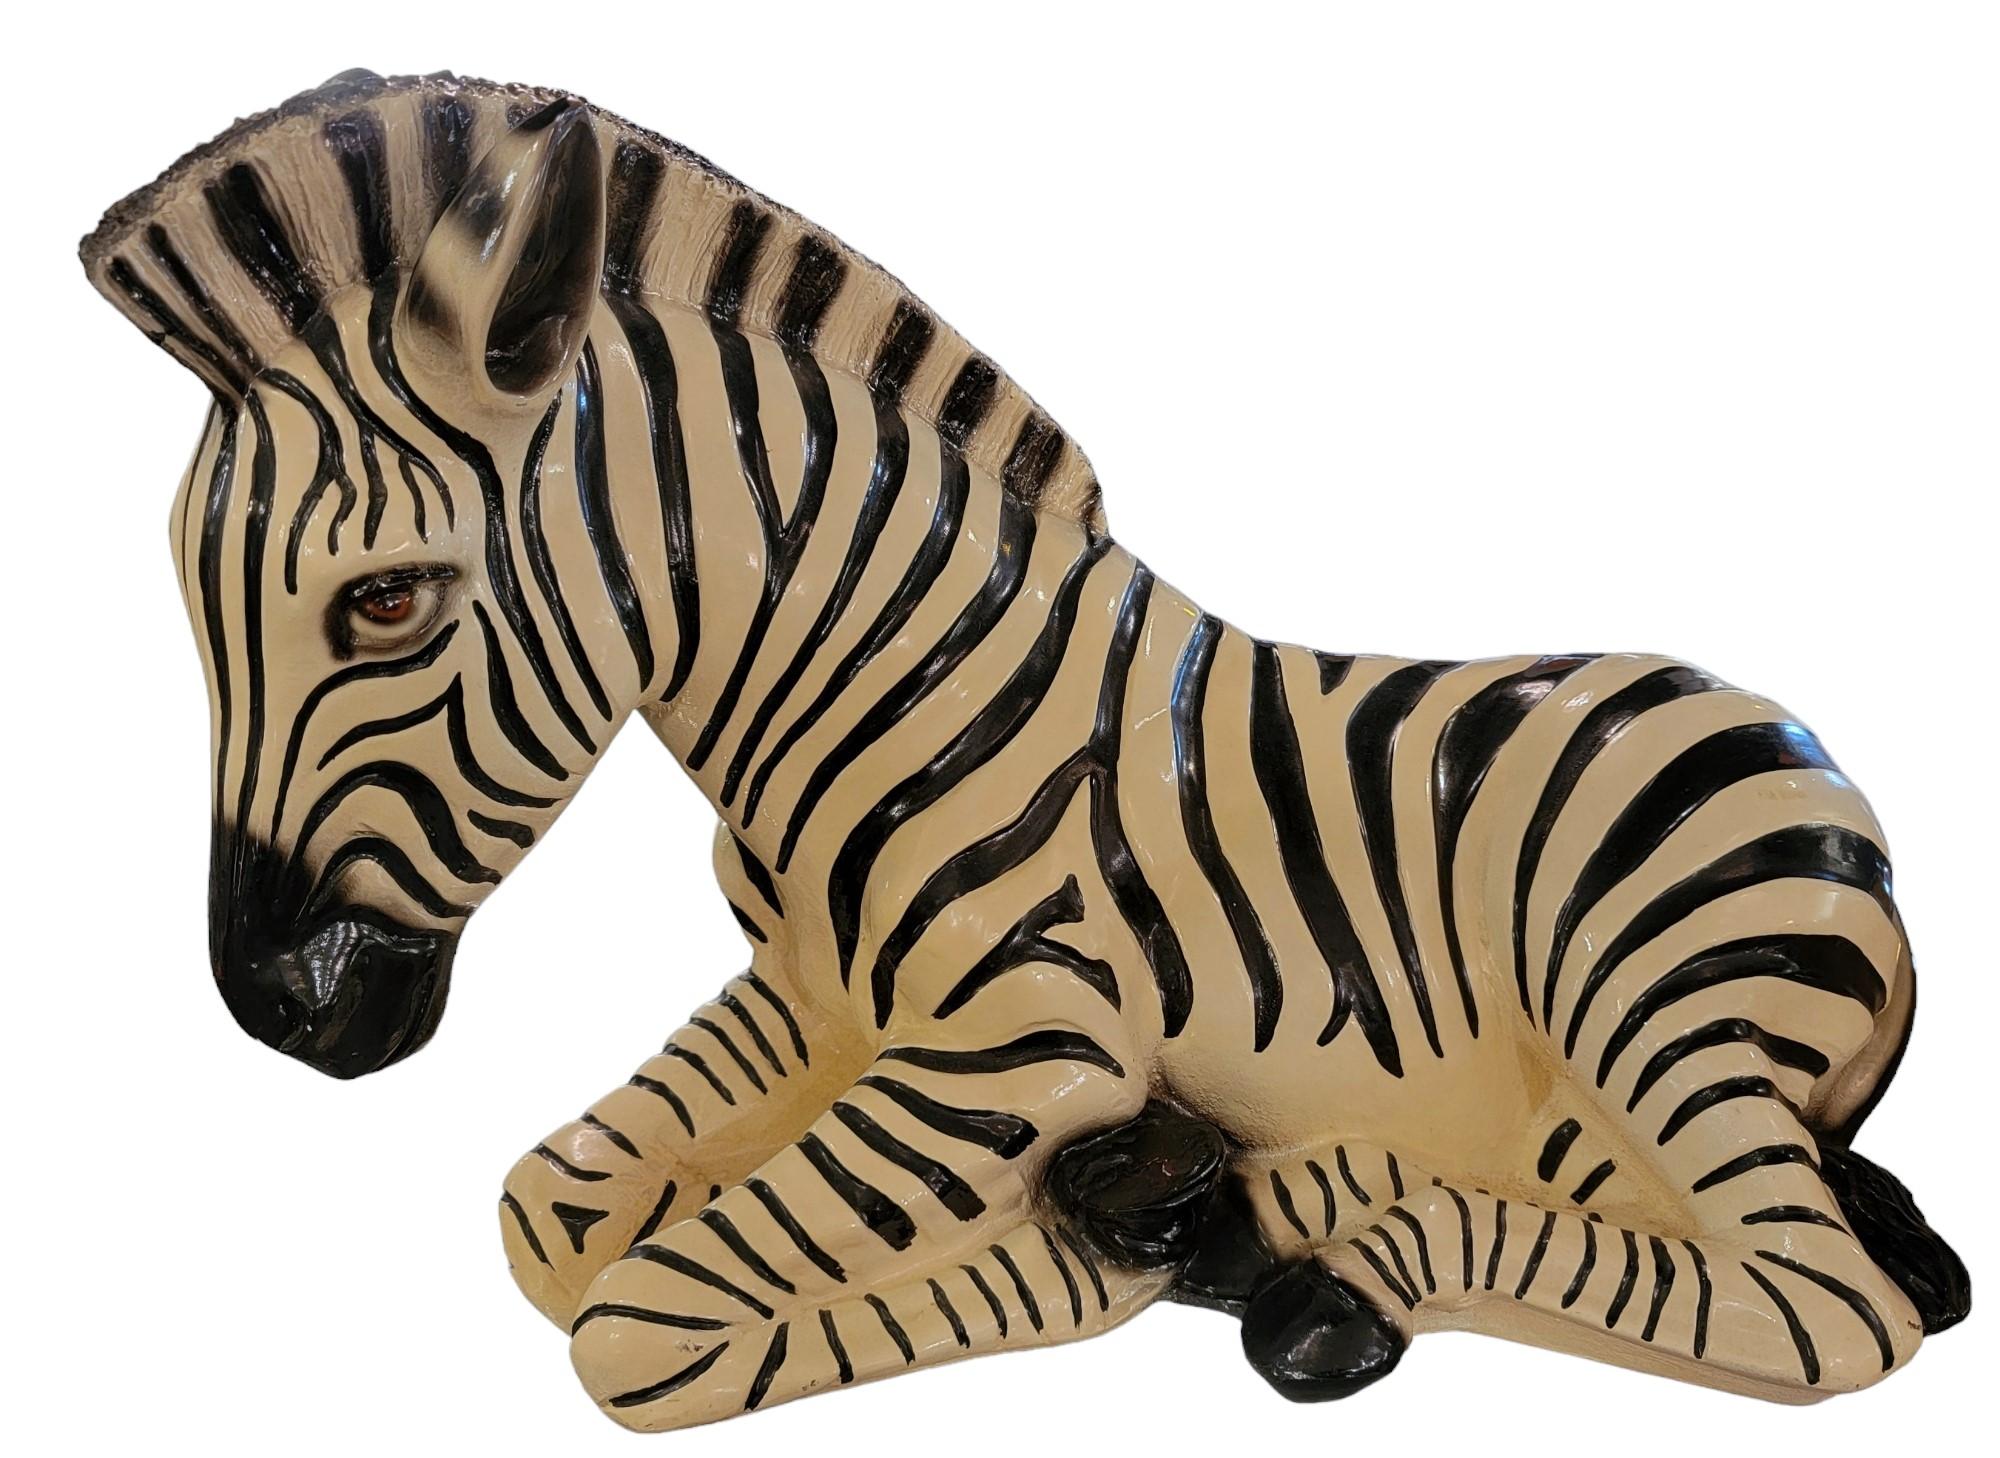 1970s Marwal Industries Baby Resin Zebra Sculpture For Sale